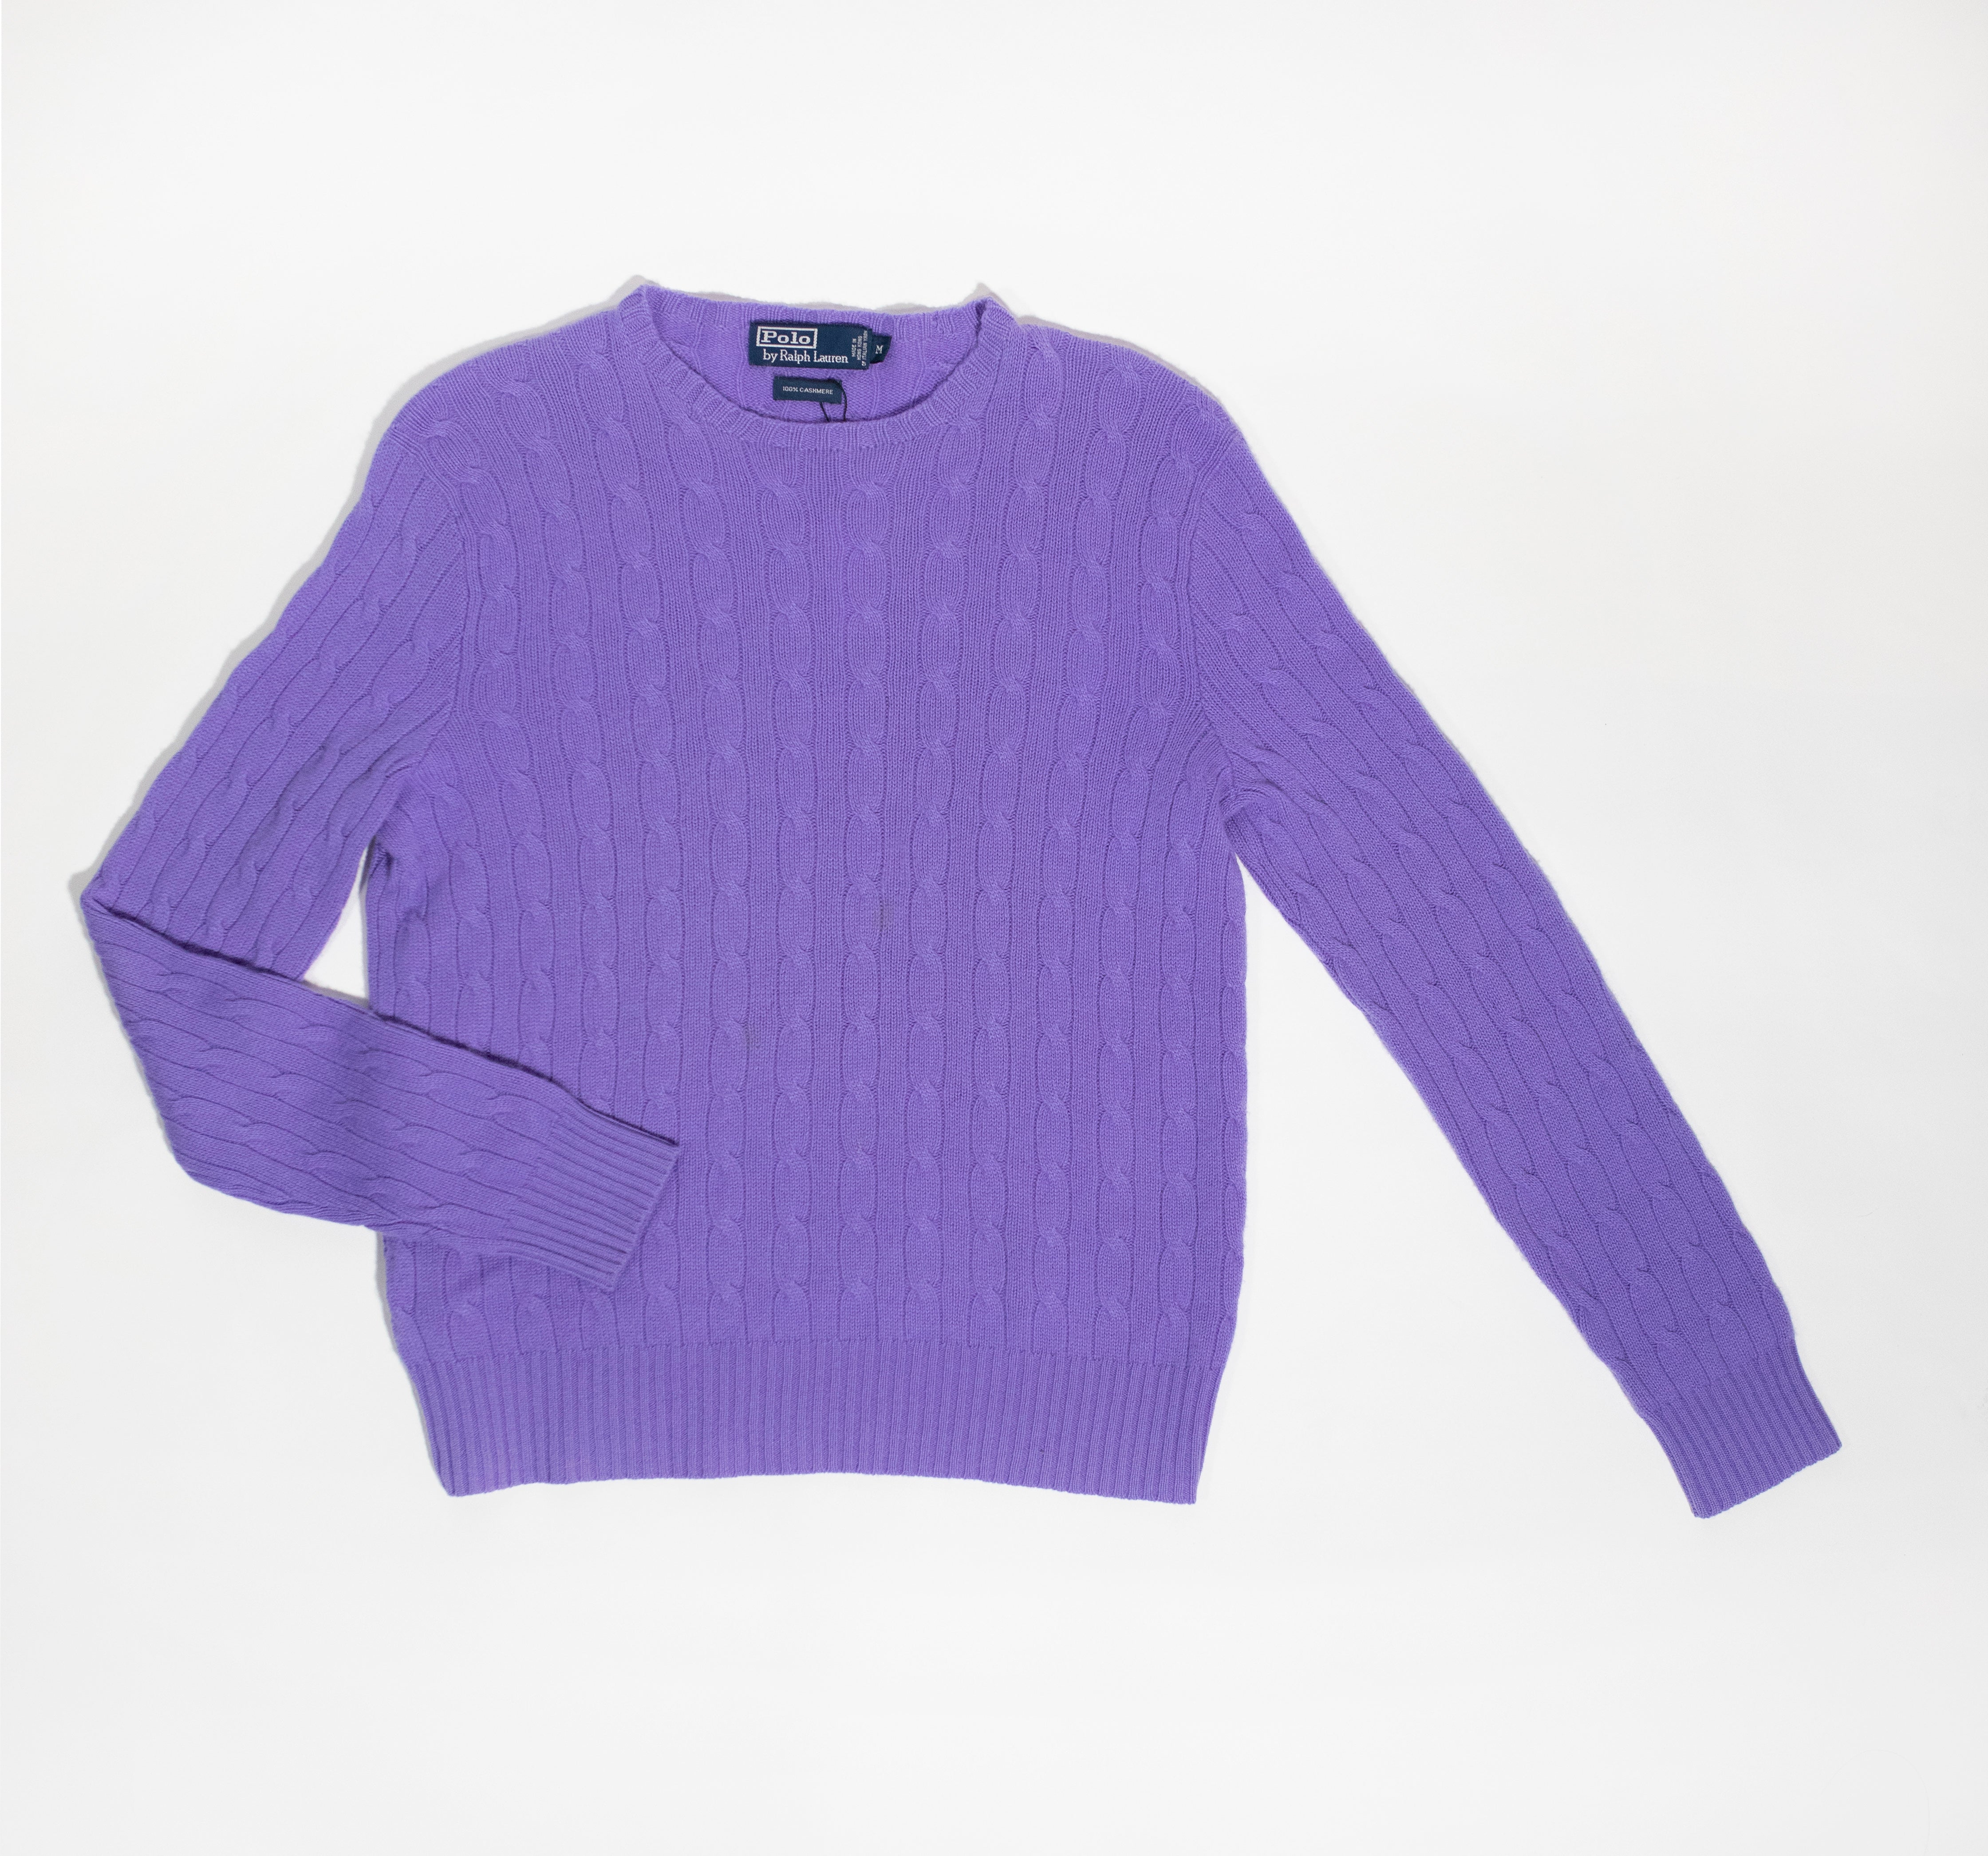 Purple Cashmere Sweater